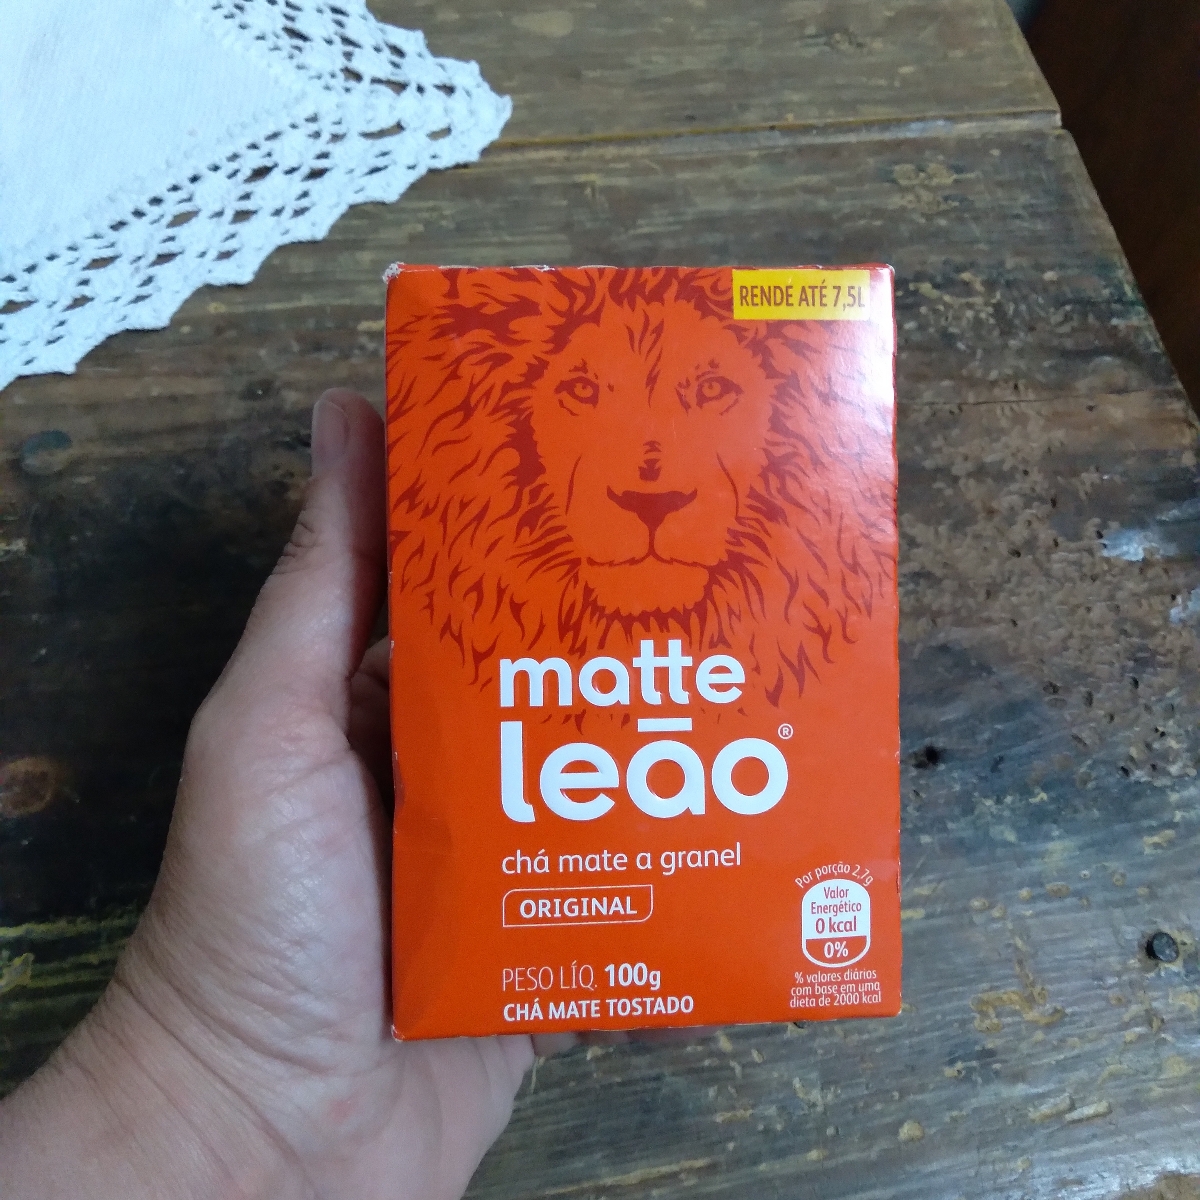 Matte Leão Chá mate Review | abillion